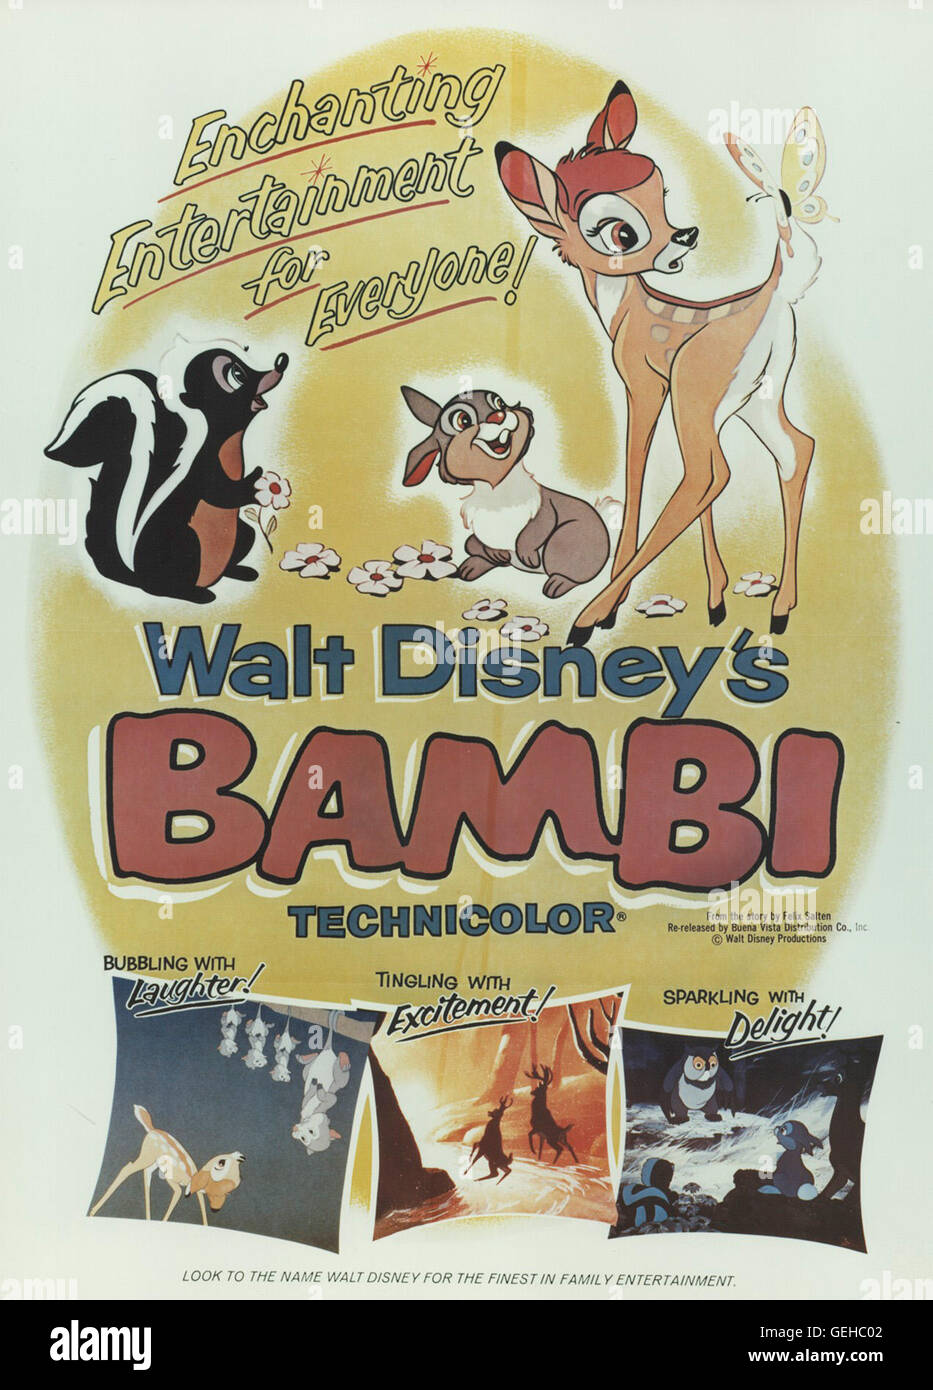 Bambi snapchat name